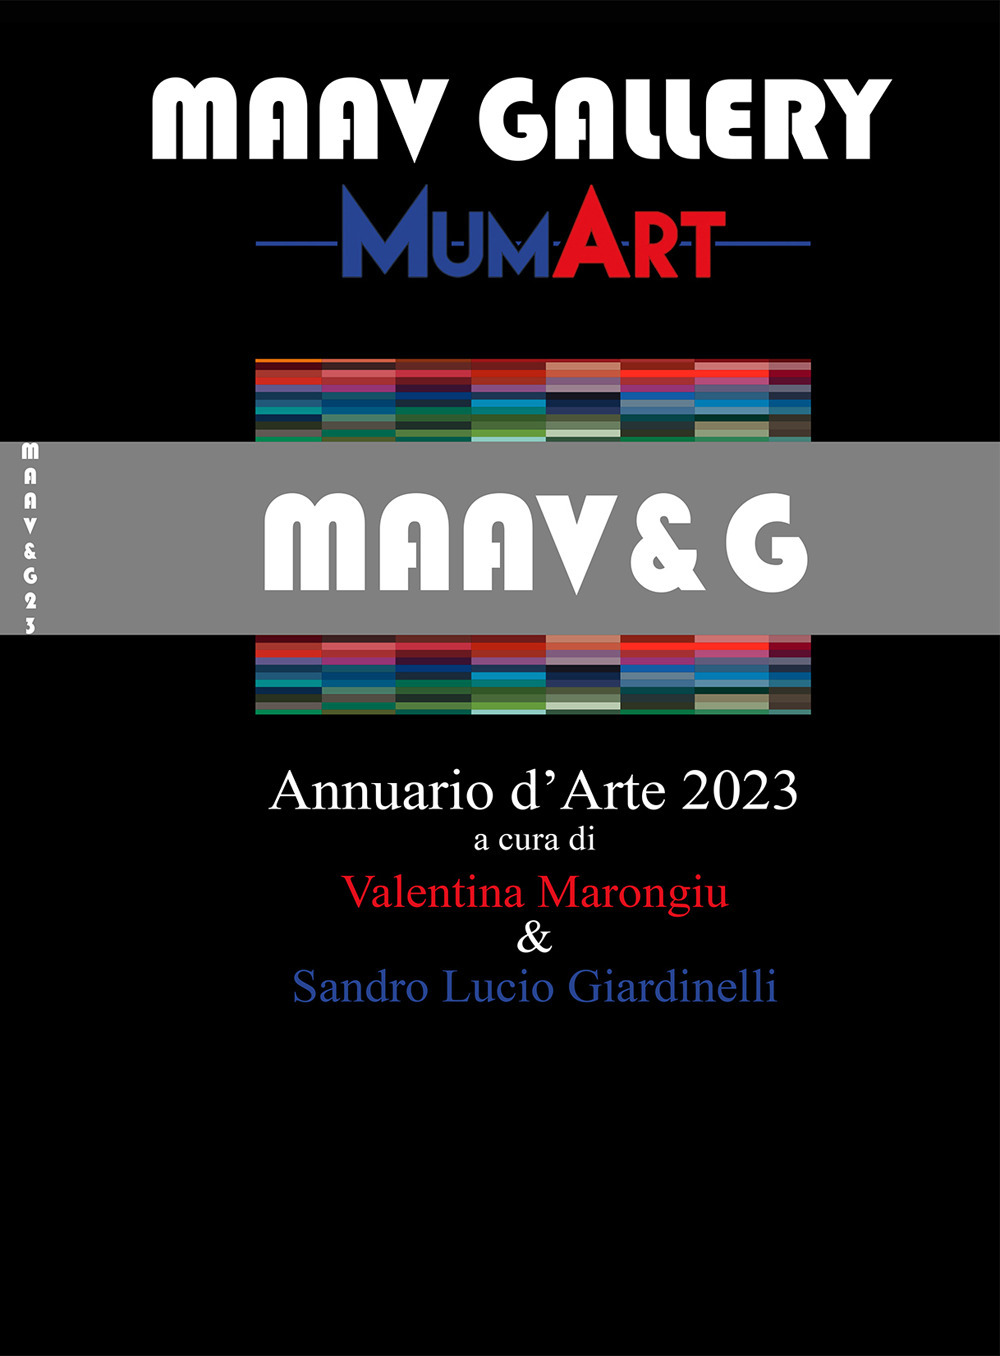 MumArt. Maav&G. Annuario d'arte 2023